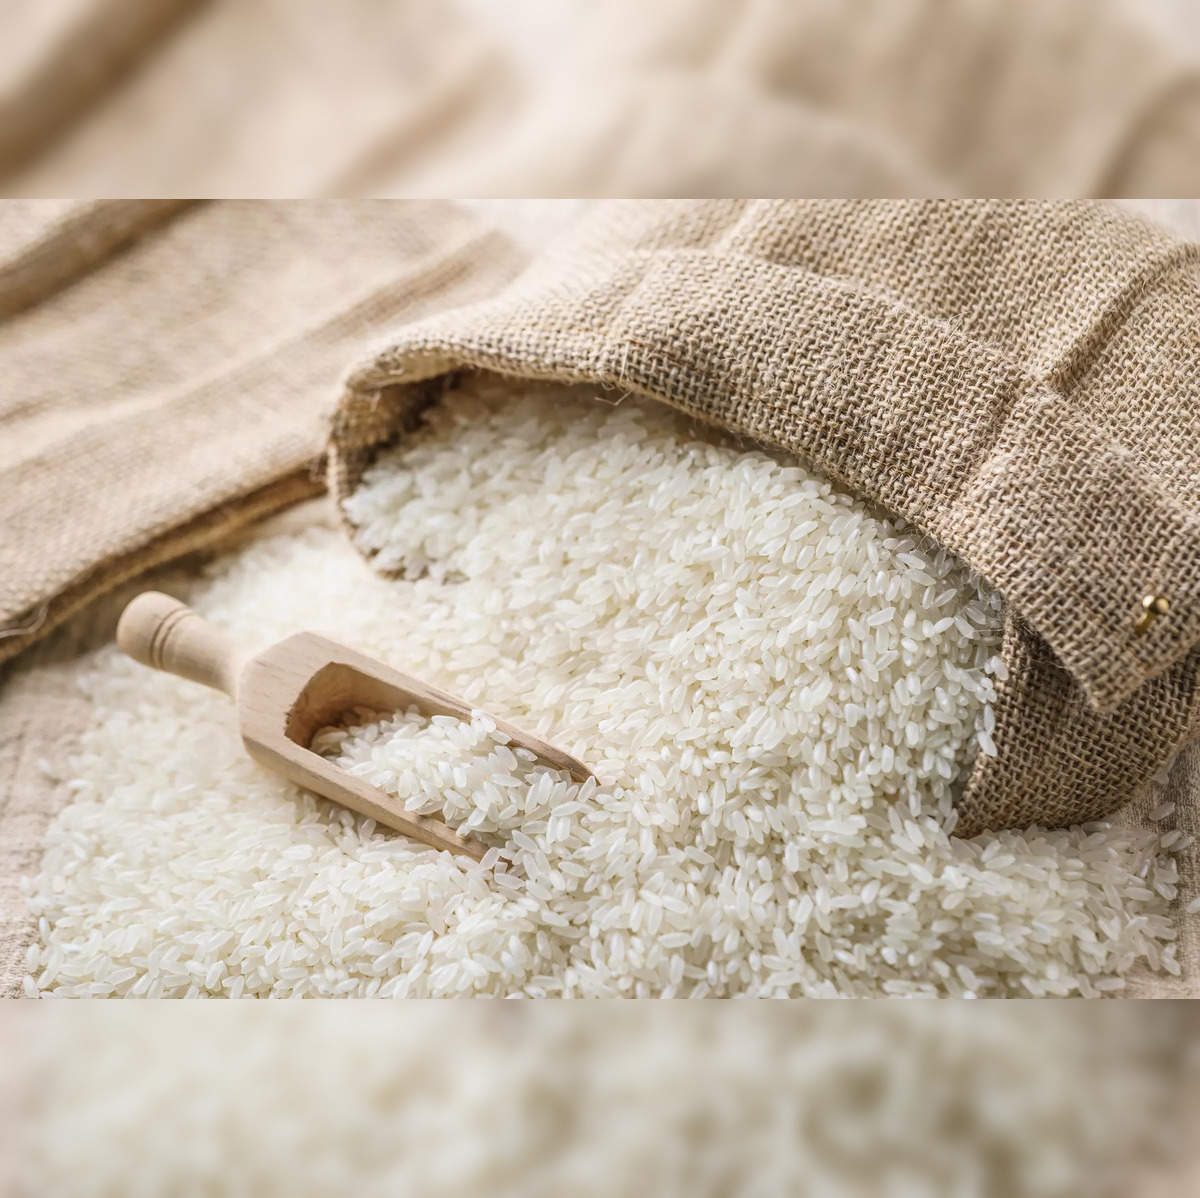 Non-Basmati white rice shortages hit stores across US; purchase